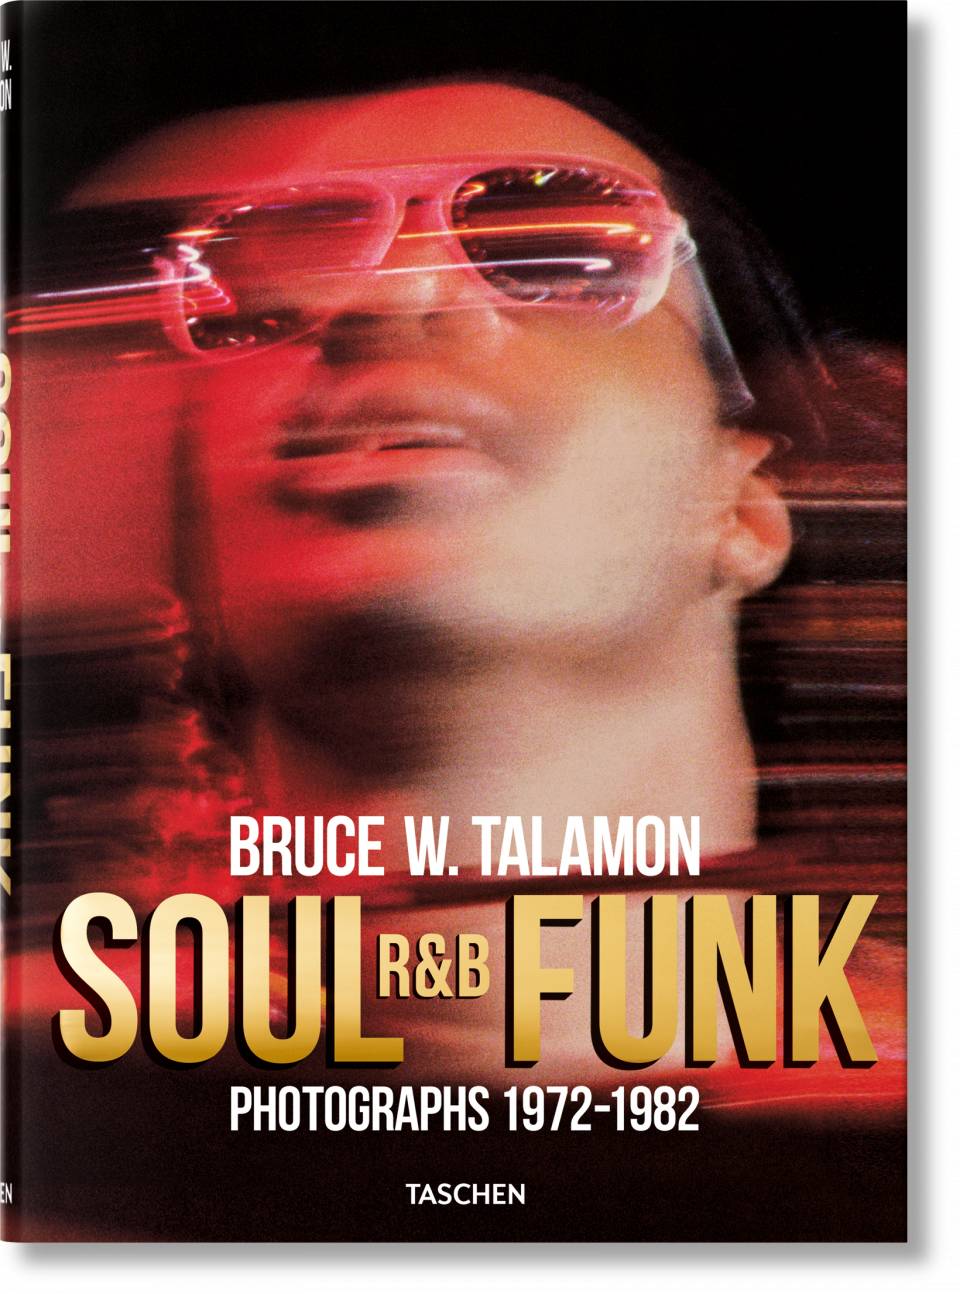 Soul. R&B. Funk. 1972-1982